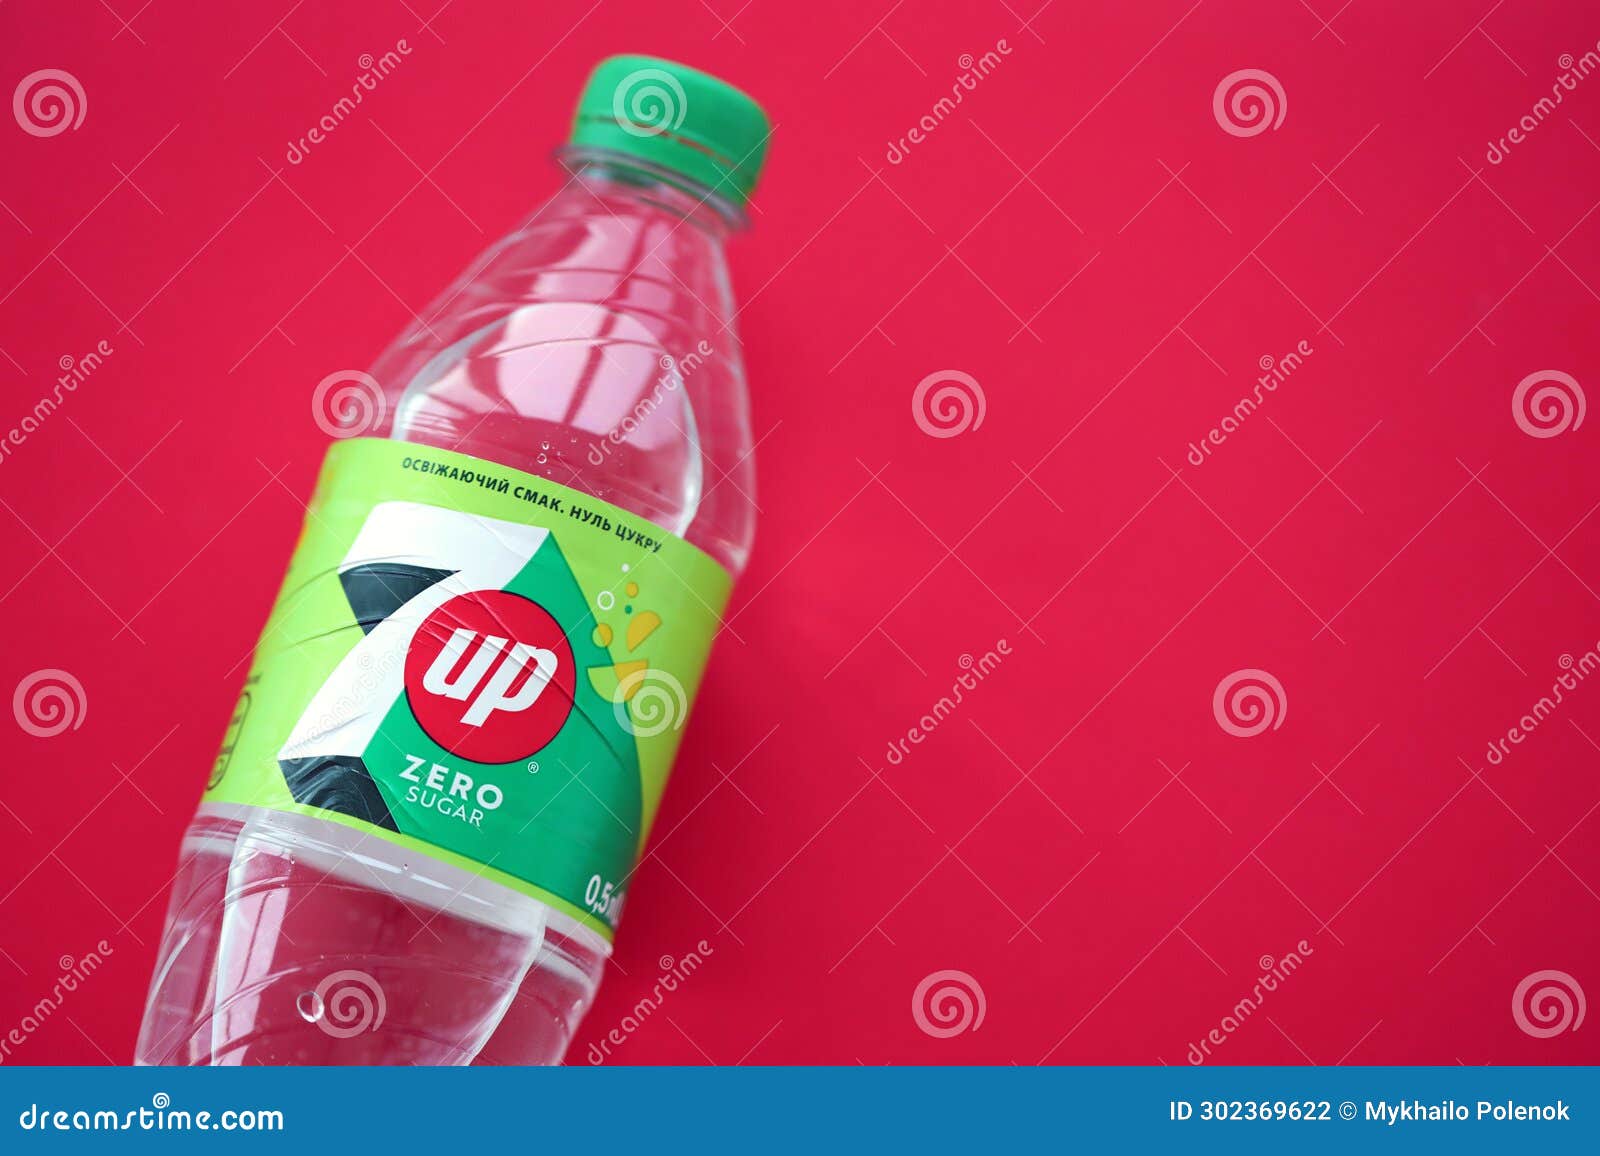 https://thumbs.dreamstime.com/z/kyiv-ukraine-october-up-liter-zero-sugar-plastic-bottle-seven-up-owned-keurig-dr-pepper-kyiv-ukraine-october-up-liter-zero-302369622.jpg